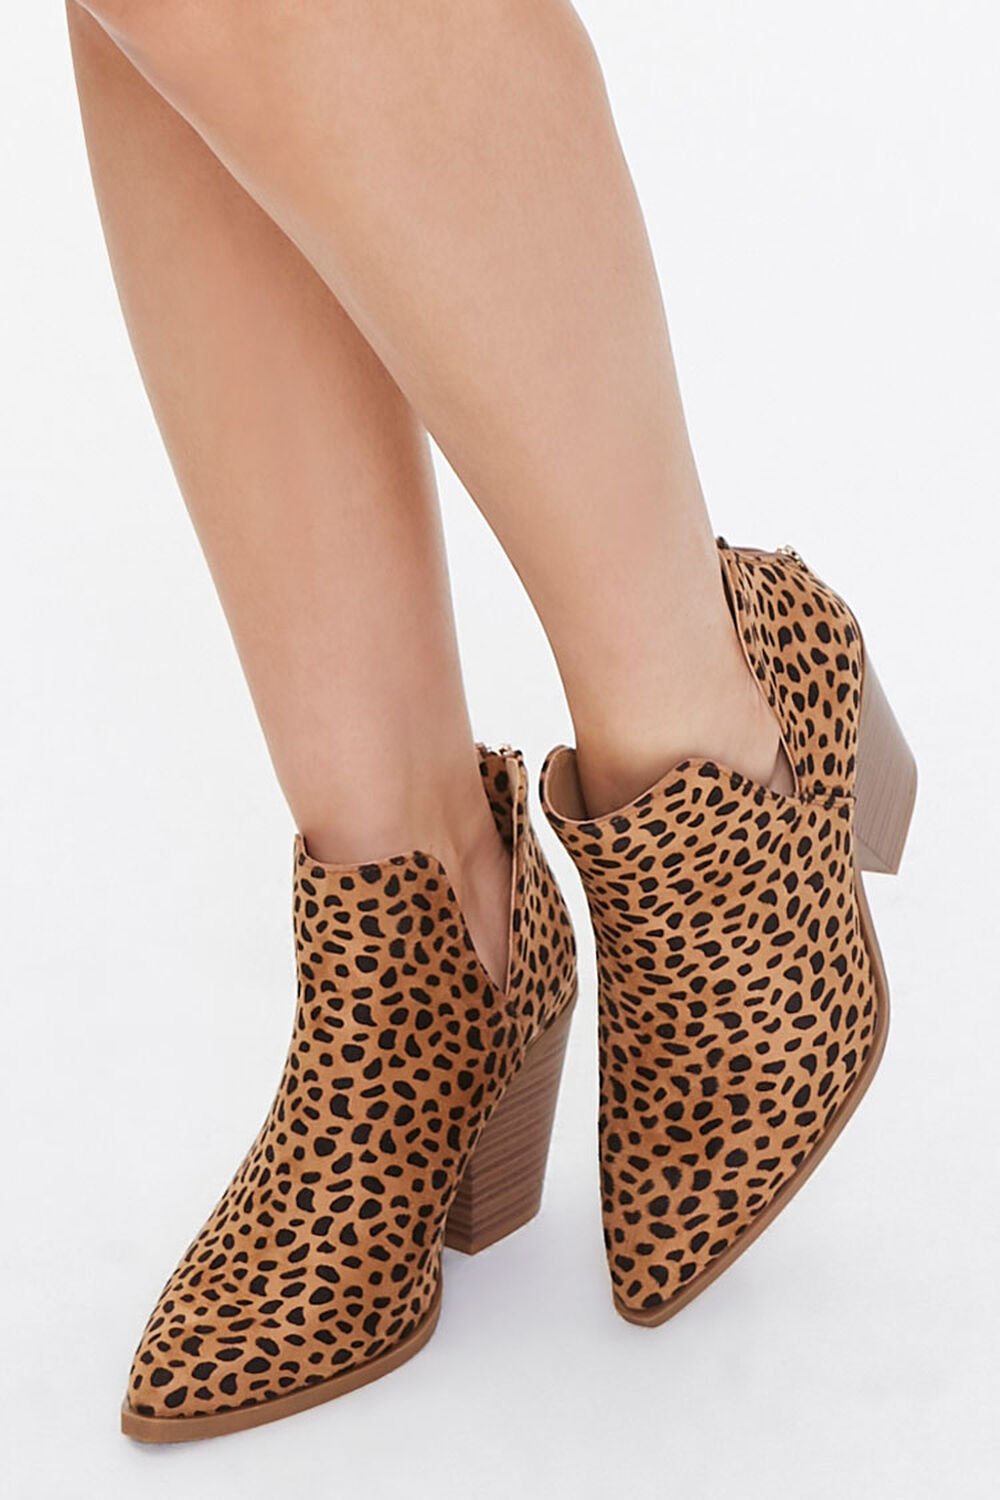 Cheetah Print Block Heel Booties, image 1